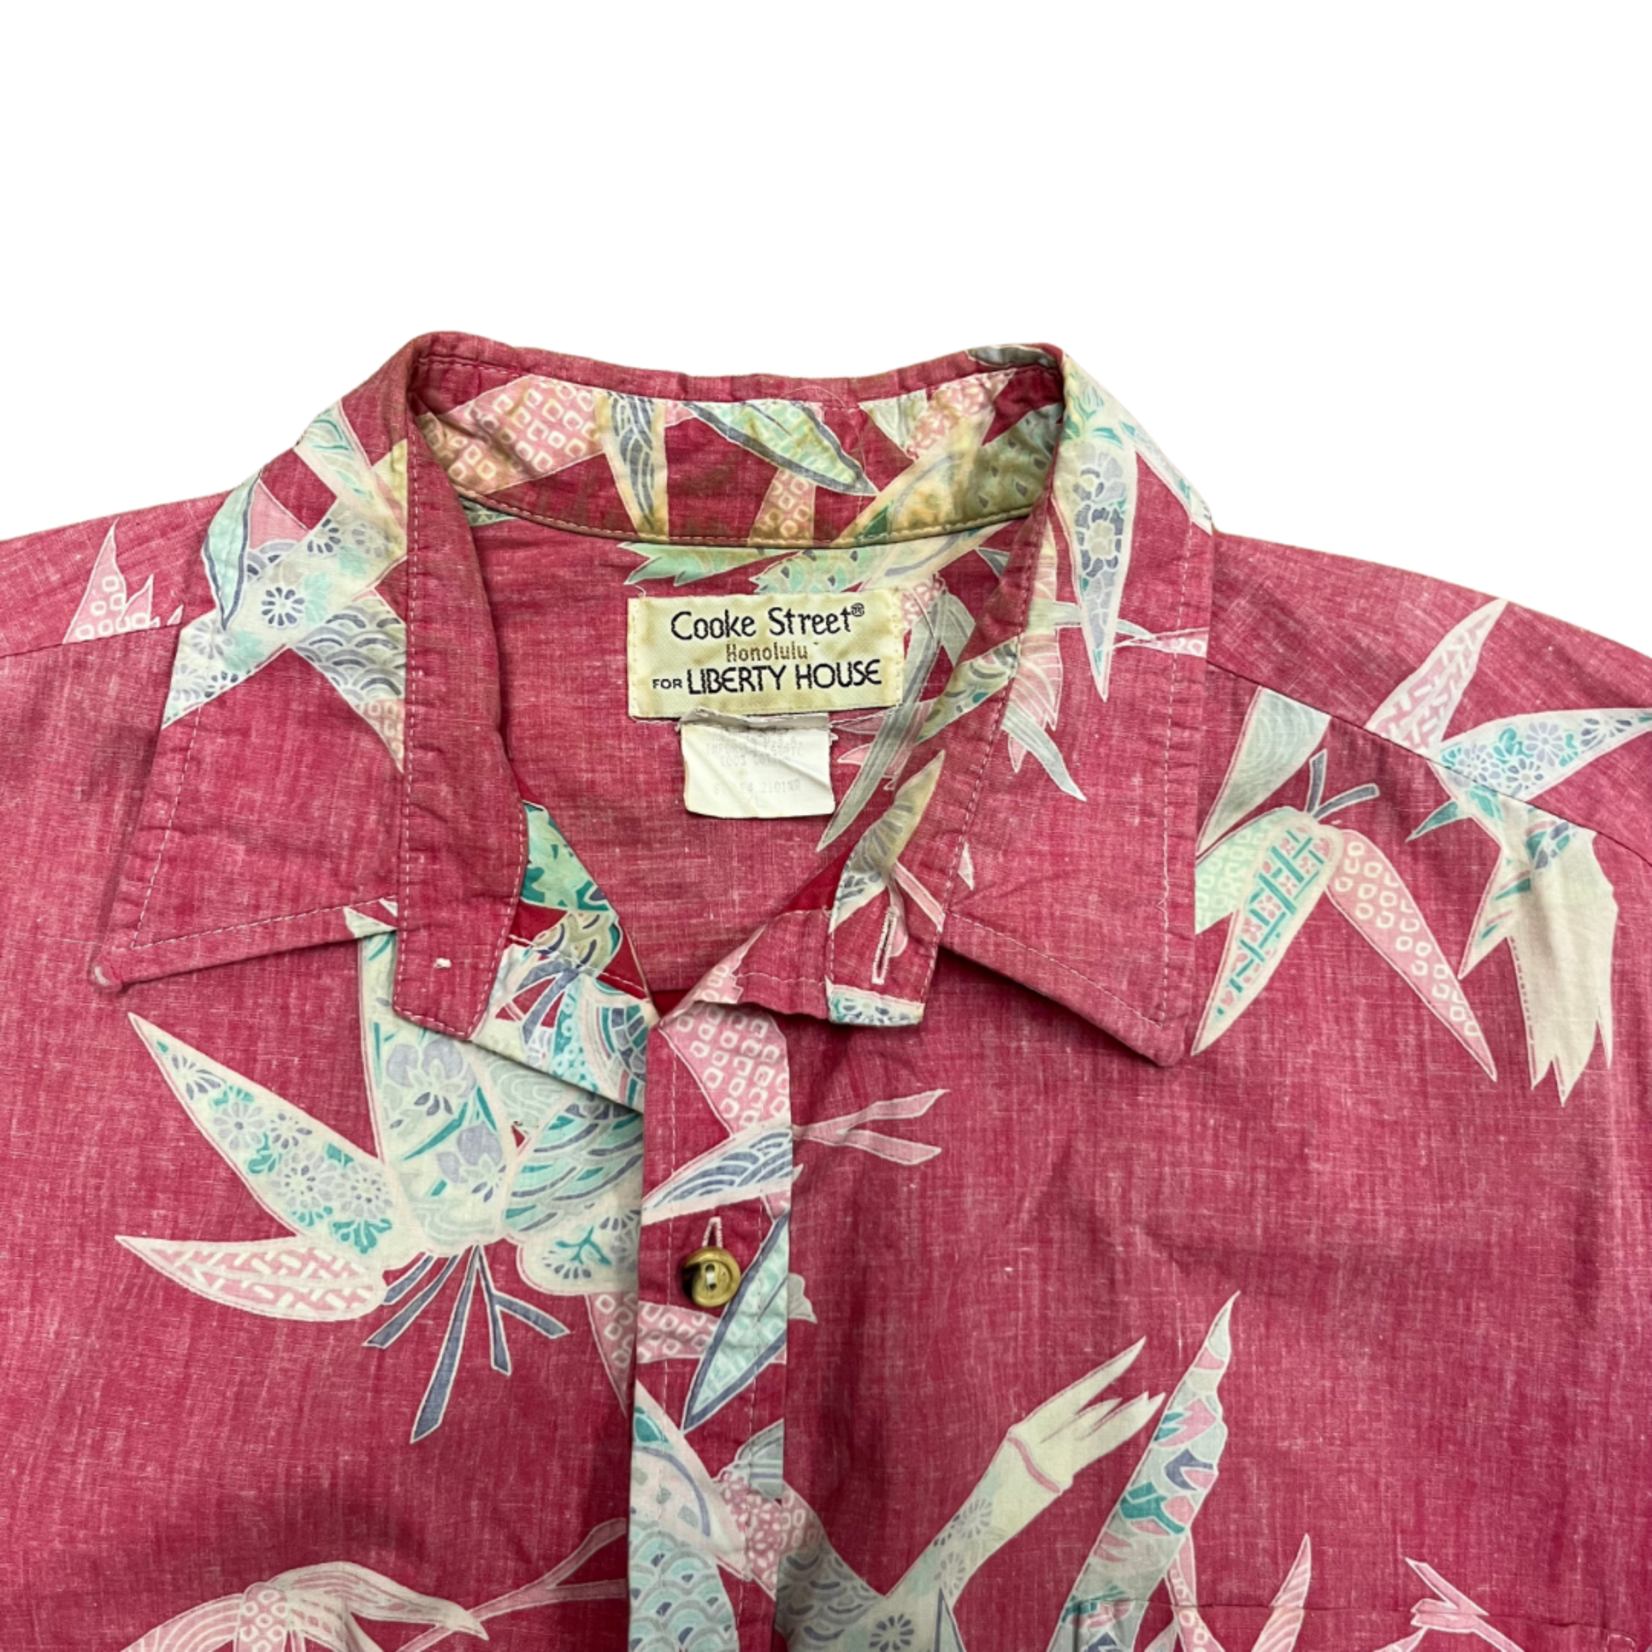 Mission Zero Men’s Vintage Aloha Shirt - Cooke Street Liberty House - Red Bird of Paradise -XL